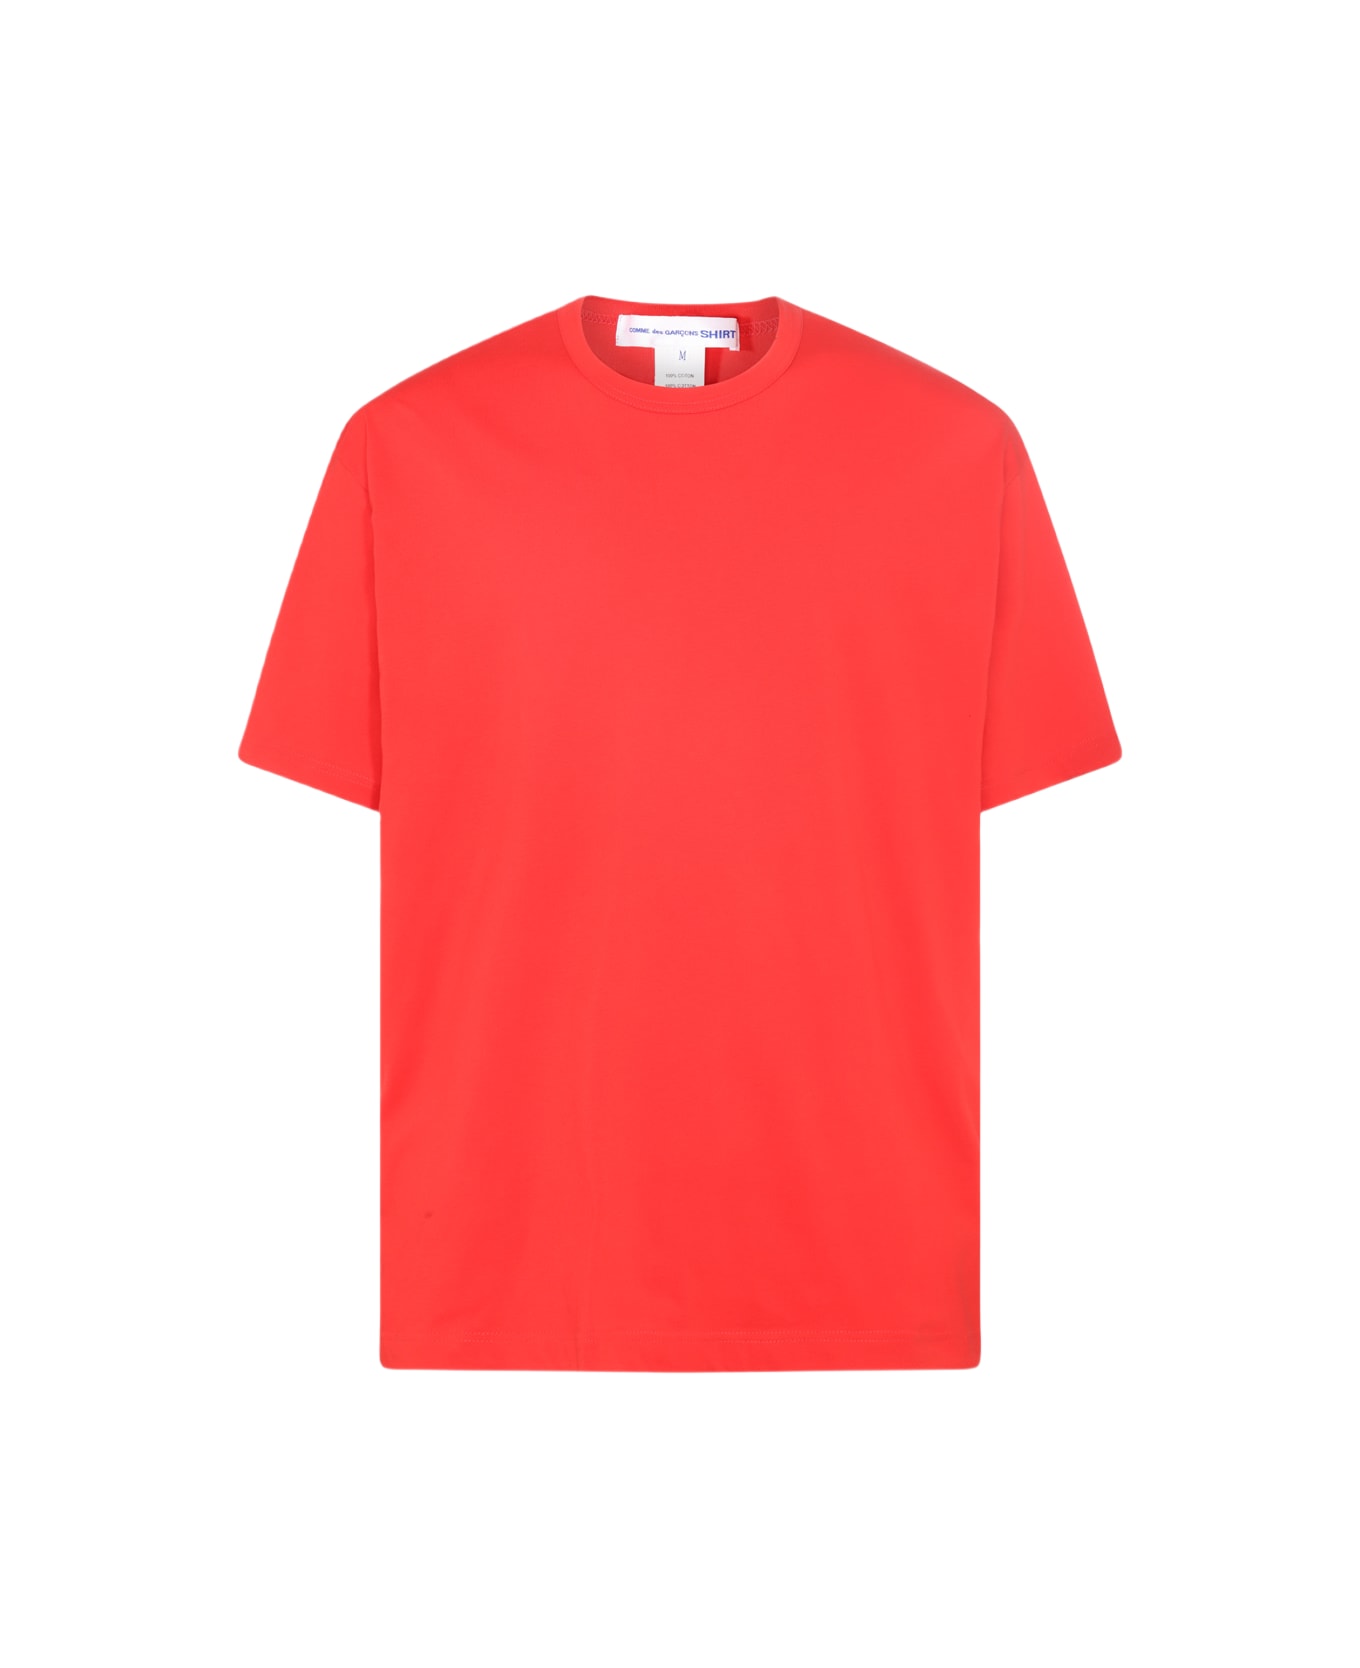 Comme des Garçons Red Cotton T-shirt - Red